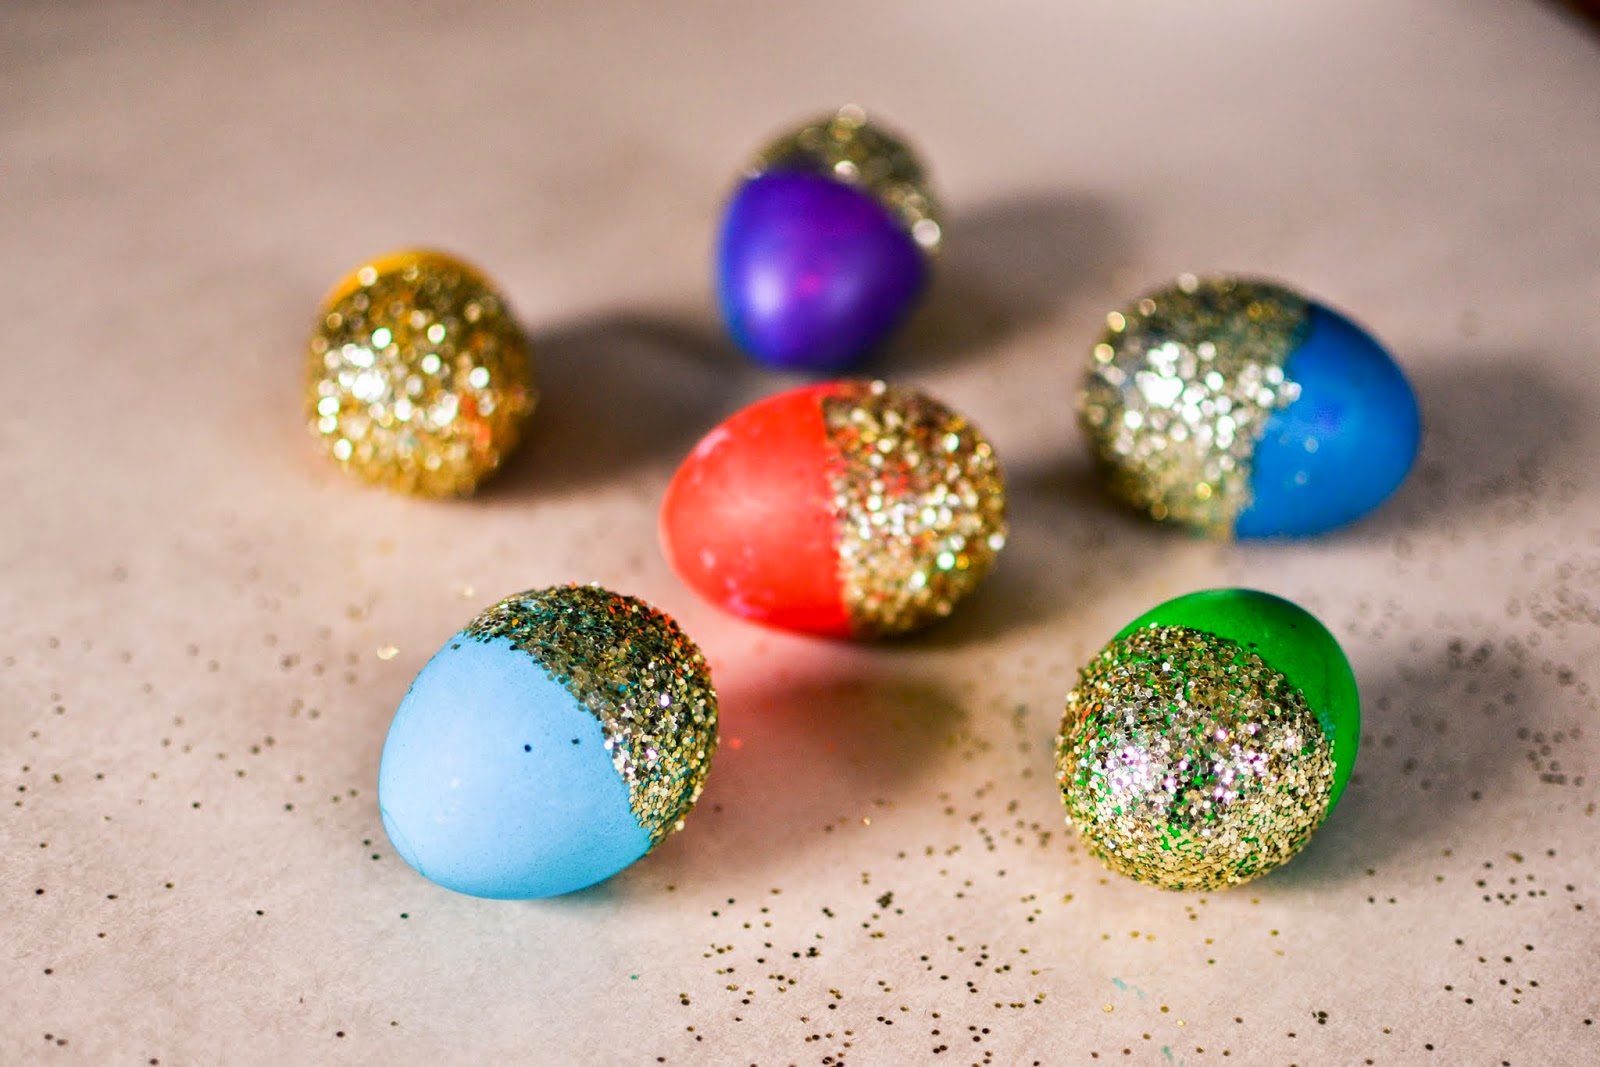 How Easter Eggs Improve Engagement - Figmints